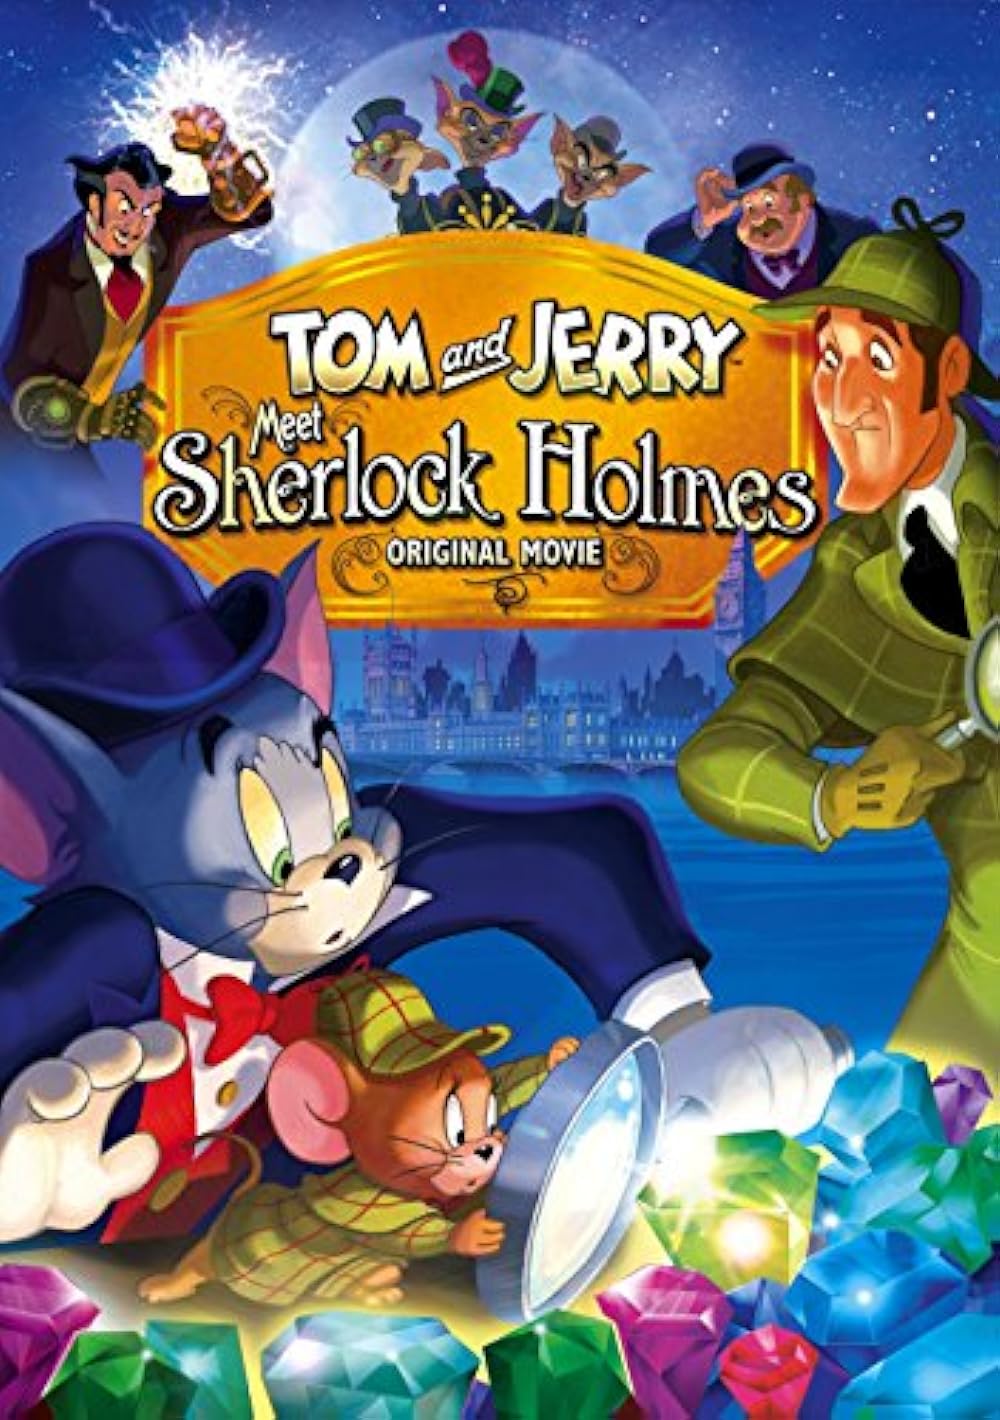 FULL MOVIE: Tom and Jerry Meet Sherlock Holmes (2010)